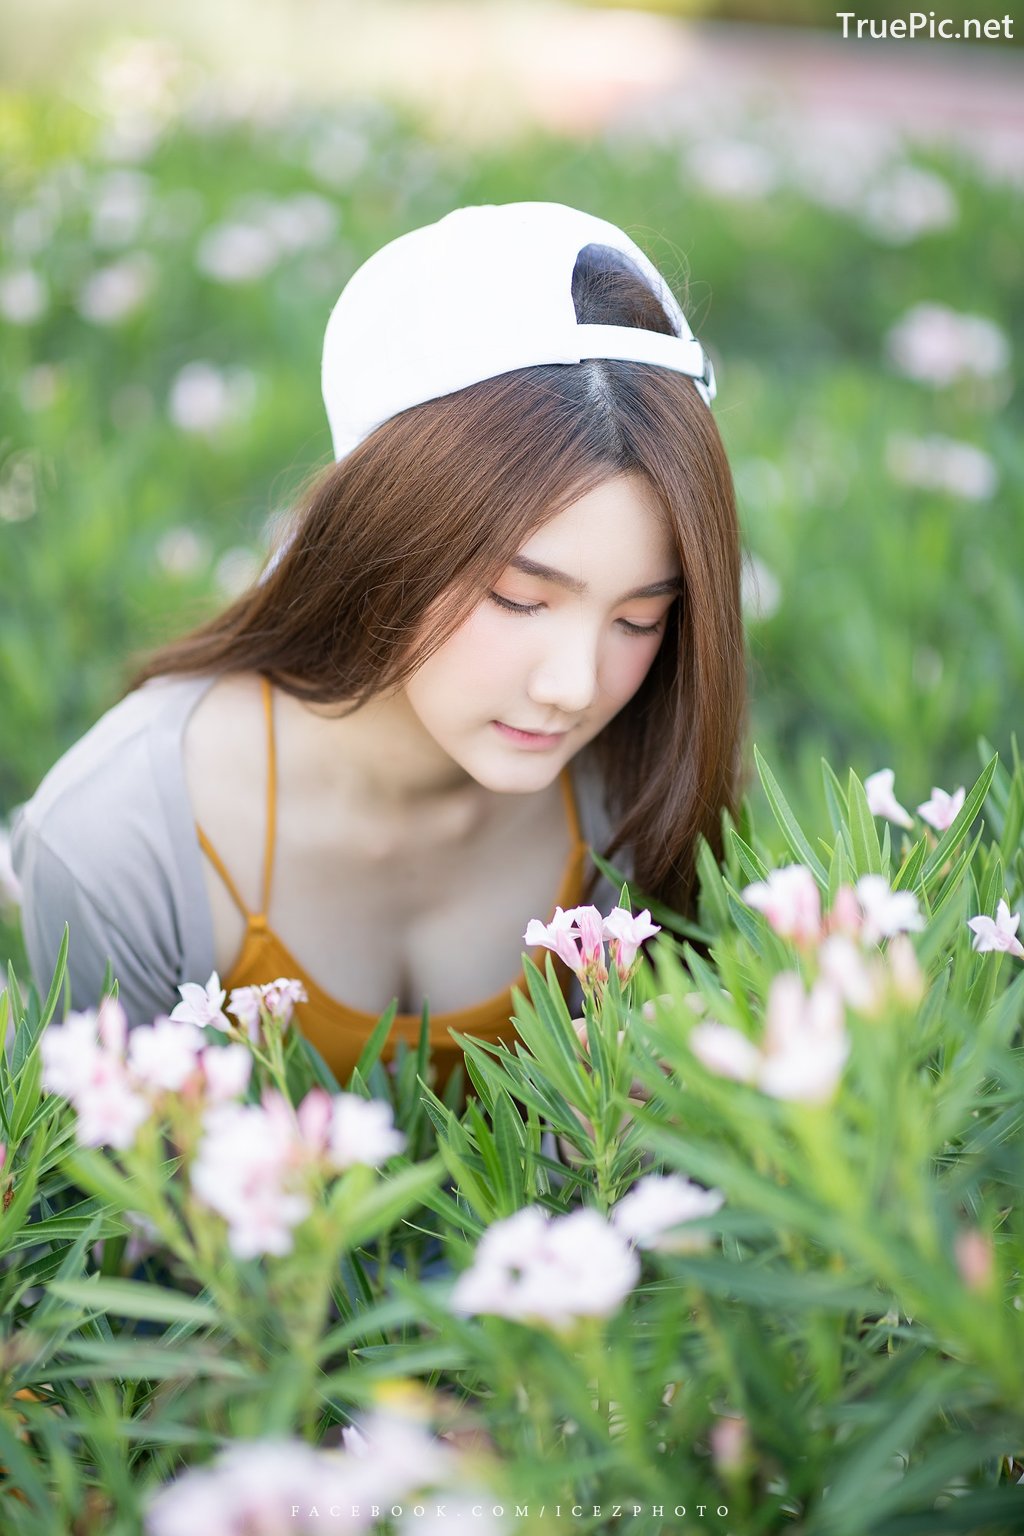 Image-Thailand-Cute-Model-Creammy-Chanama-Beautiful-Angel-In-Flower-Garden-TruePic.net- Picture-23